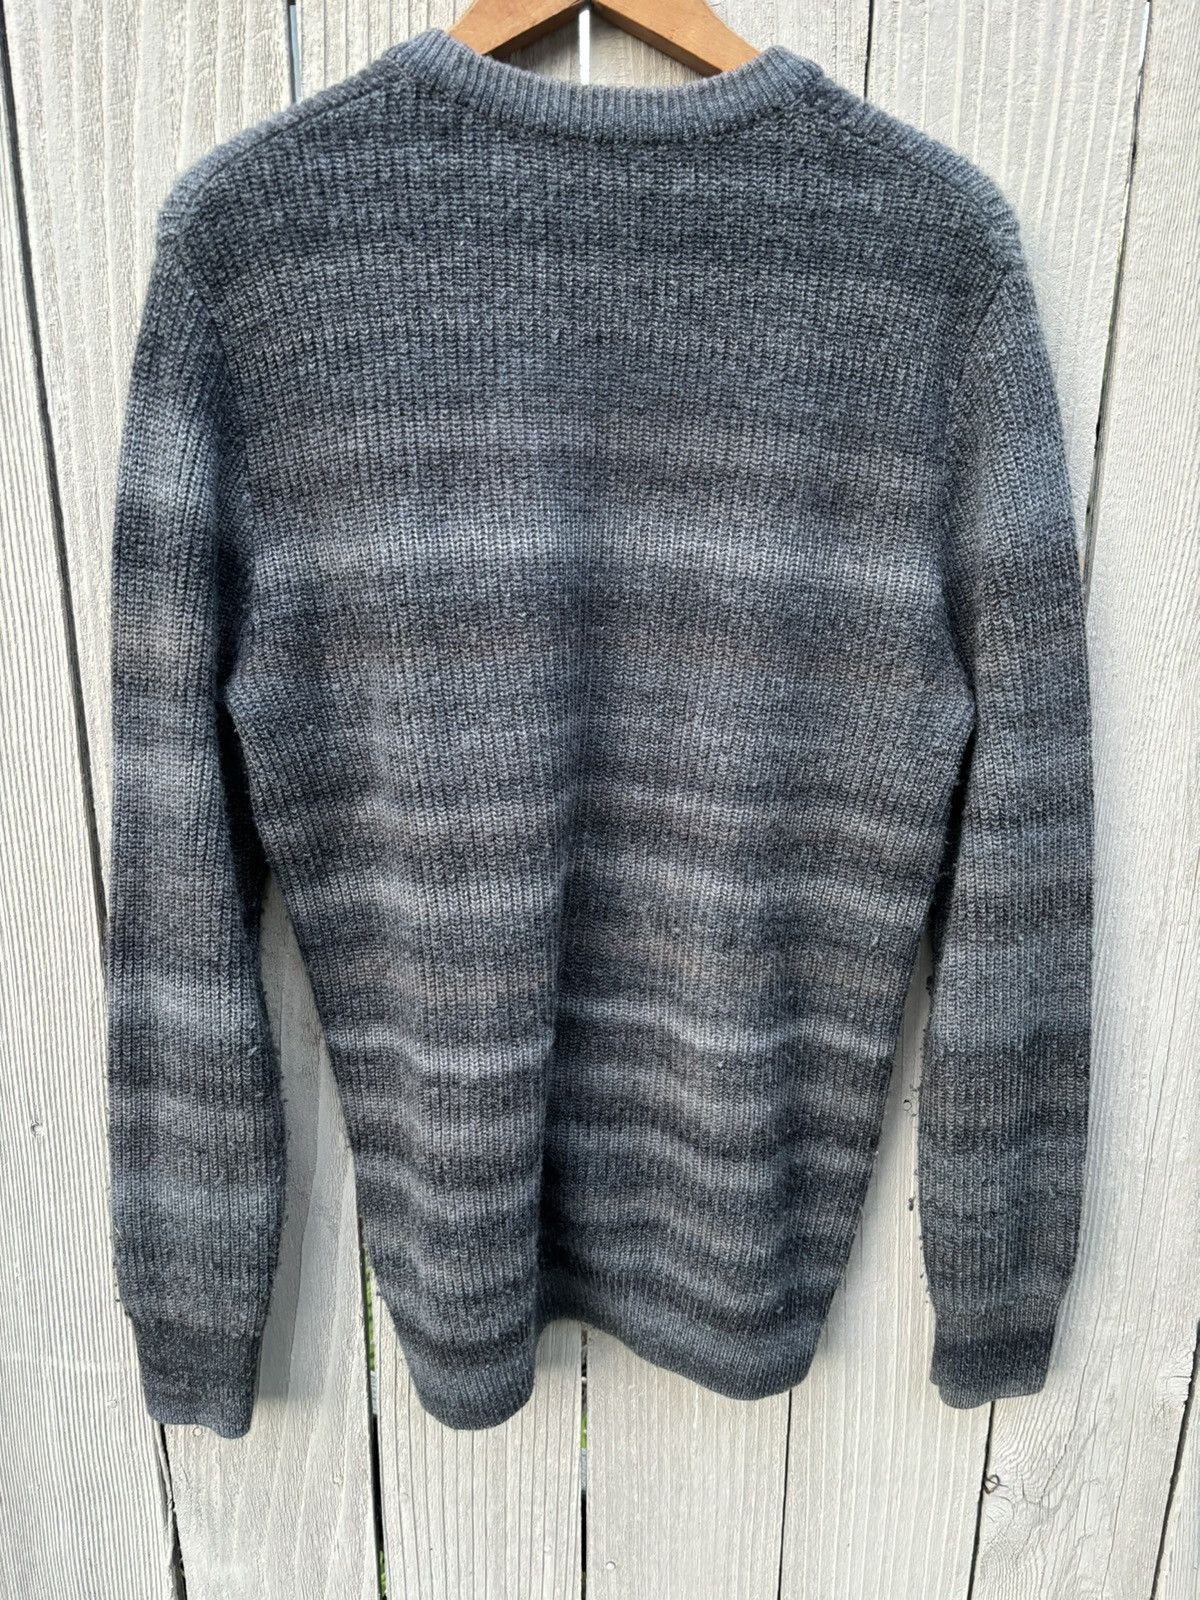 Vince Grey Striped Cashmere Blend Sweater Size US M / EU 48-50 / 2 - 2 Preview